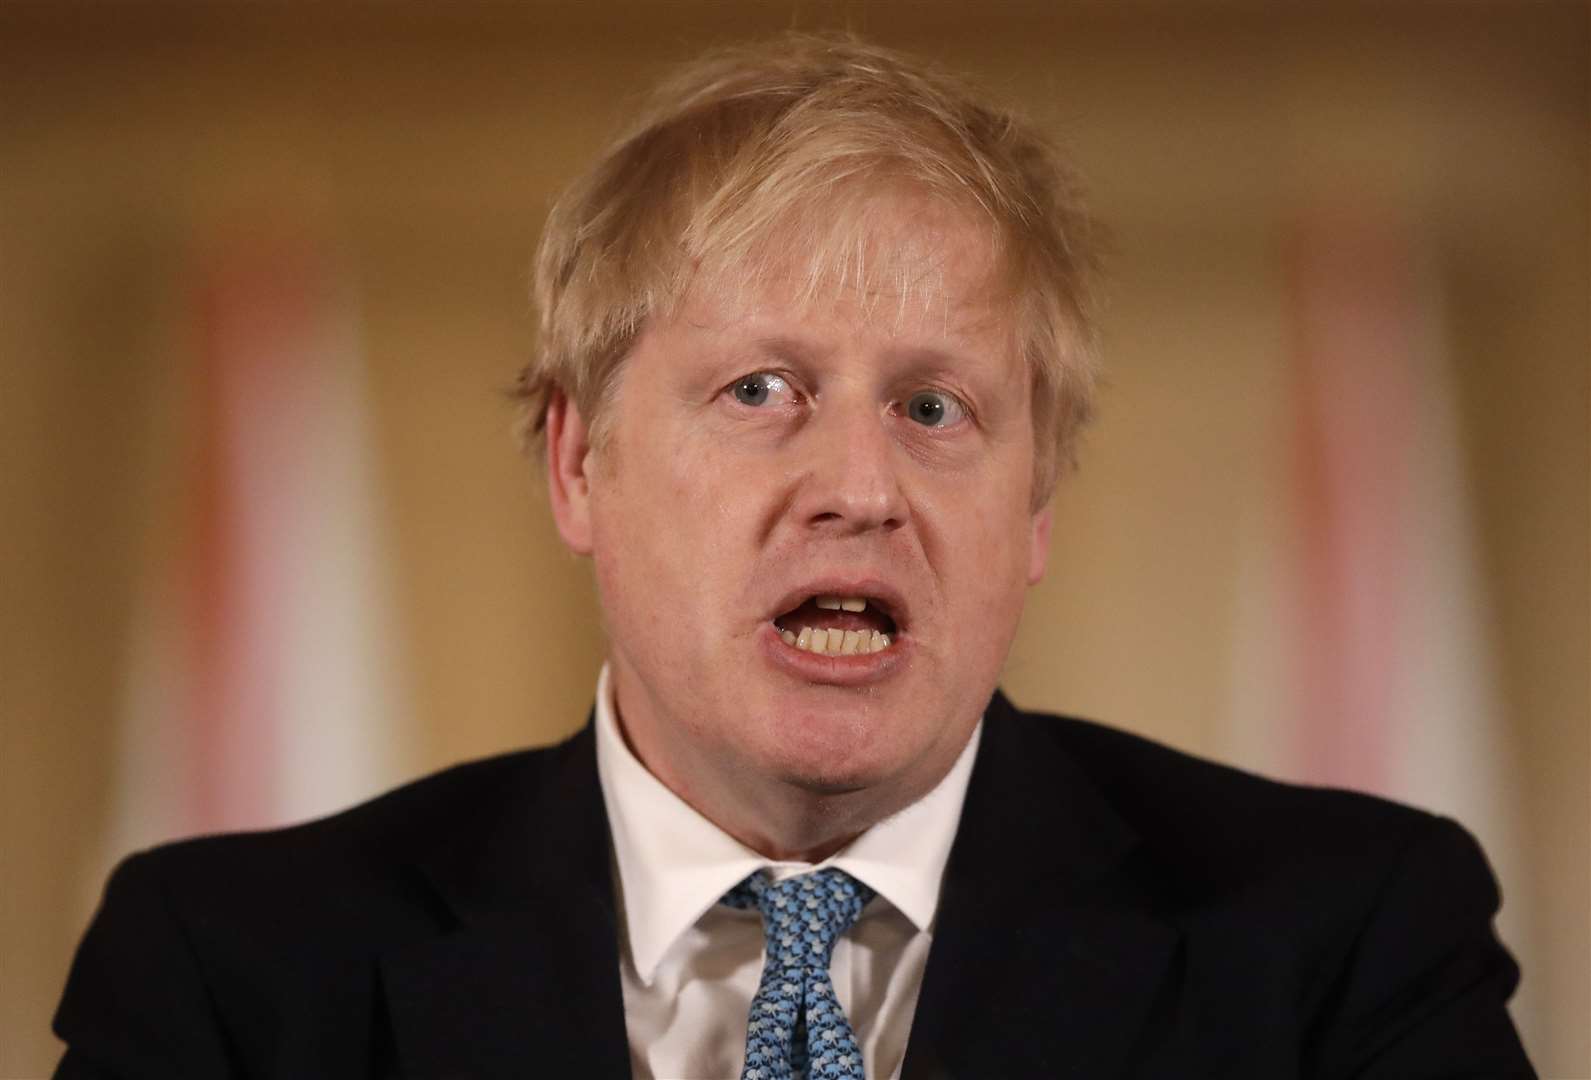 Prime Minister Boris Johnson has advised people to avoid mass gatherings